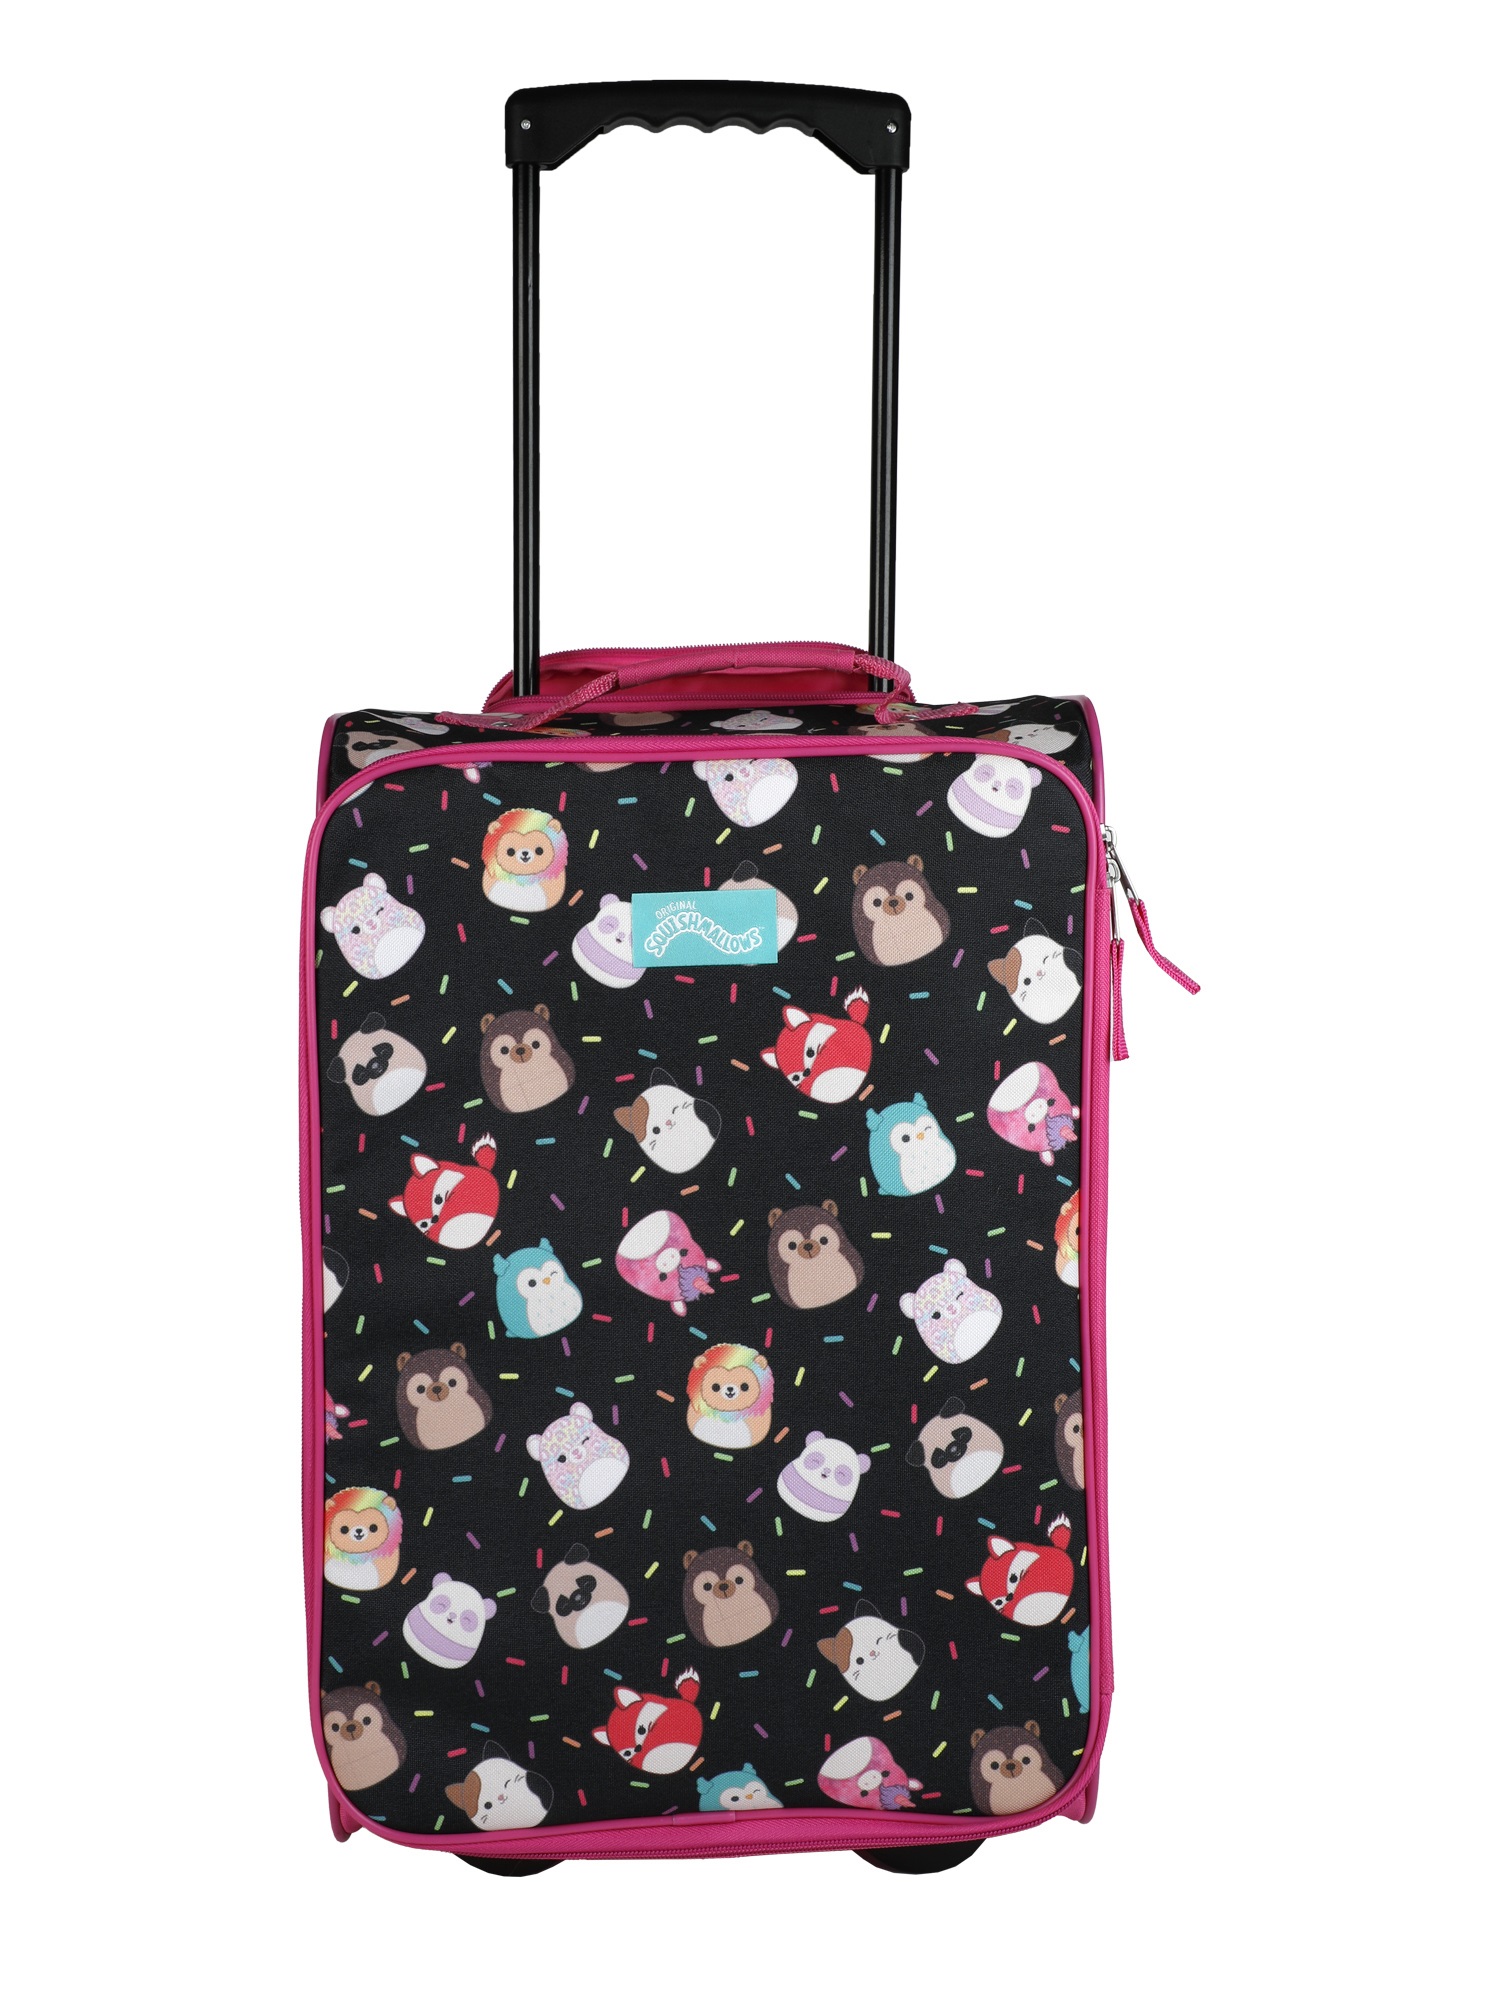 Squishmallows Lola Unicorn 2pc  Travel Set with 18" Luggage and 10" Plush Backpack - image 2 of 9